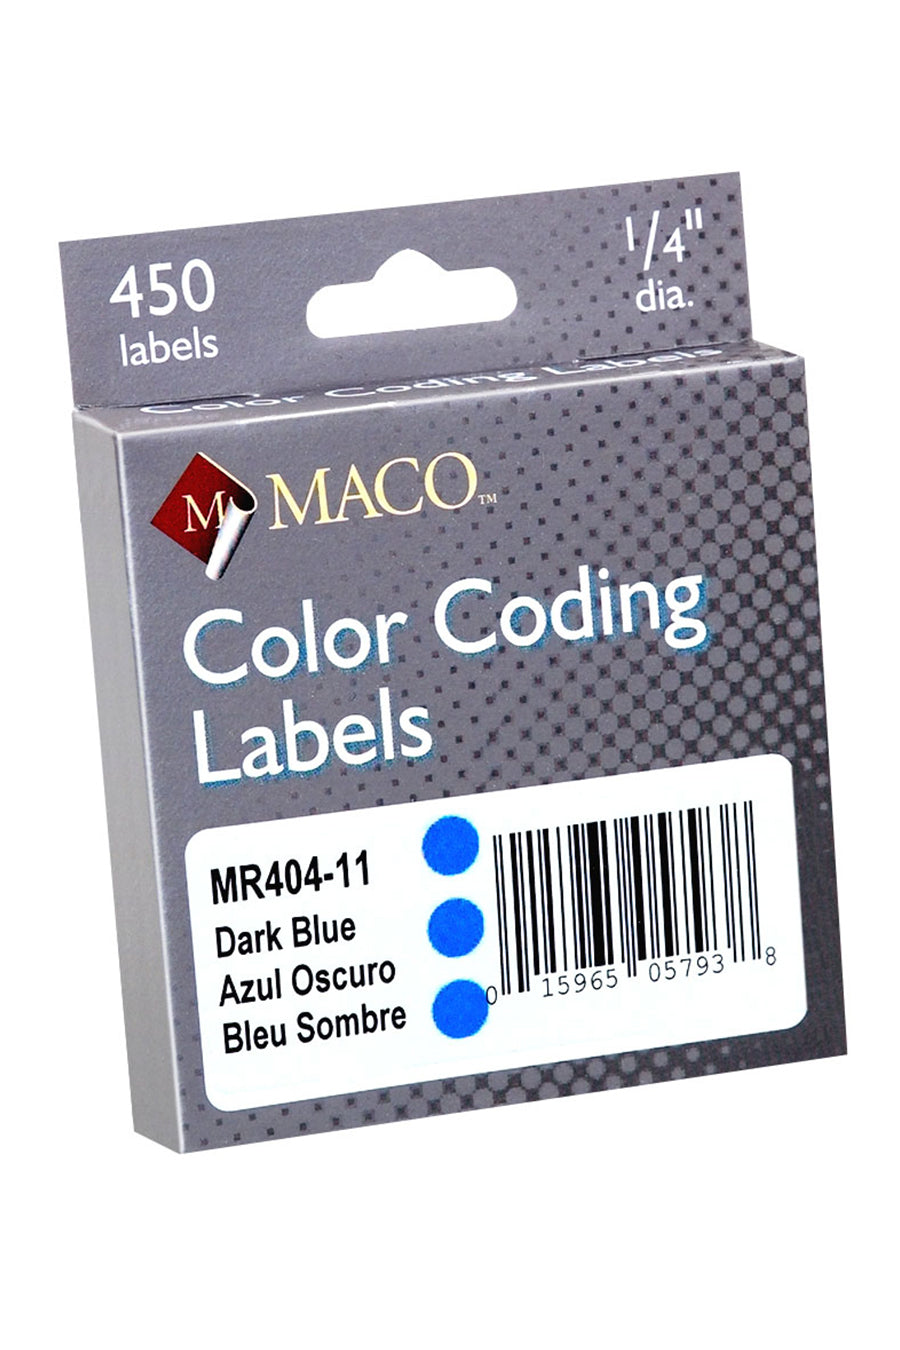 1/4" Dia. Color Coding Labels, Dark Blue, 450/On Roll in Dispenser Box